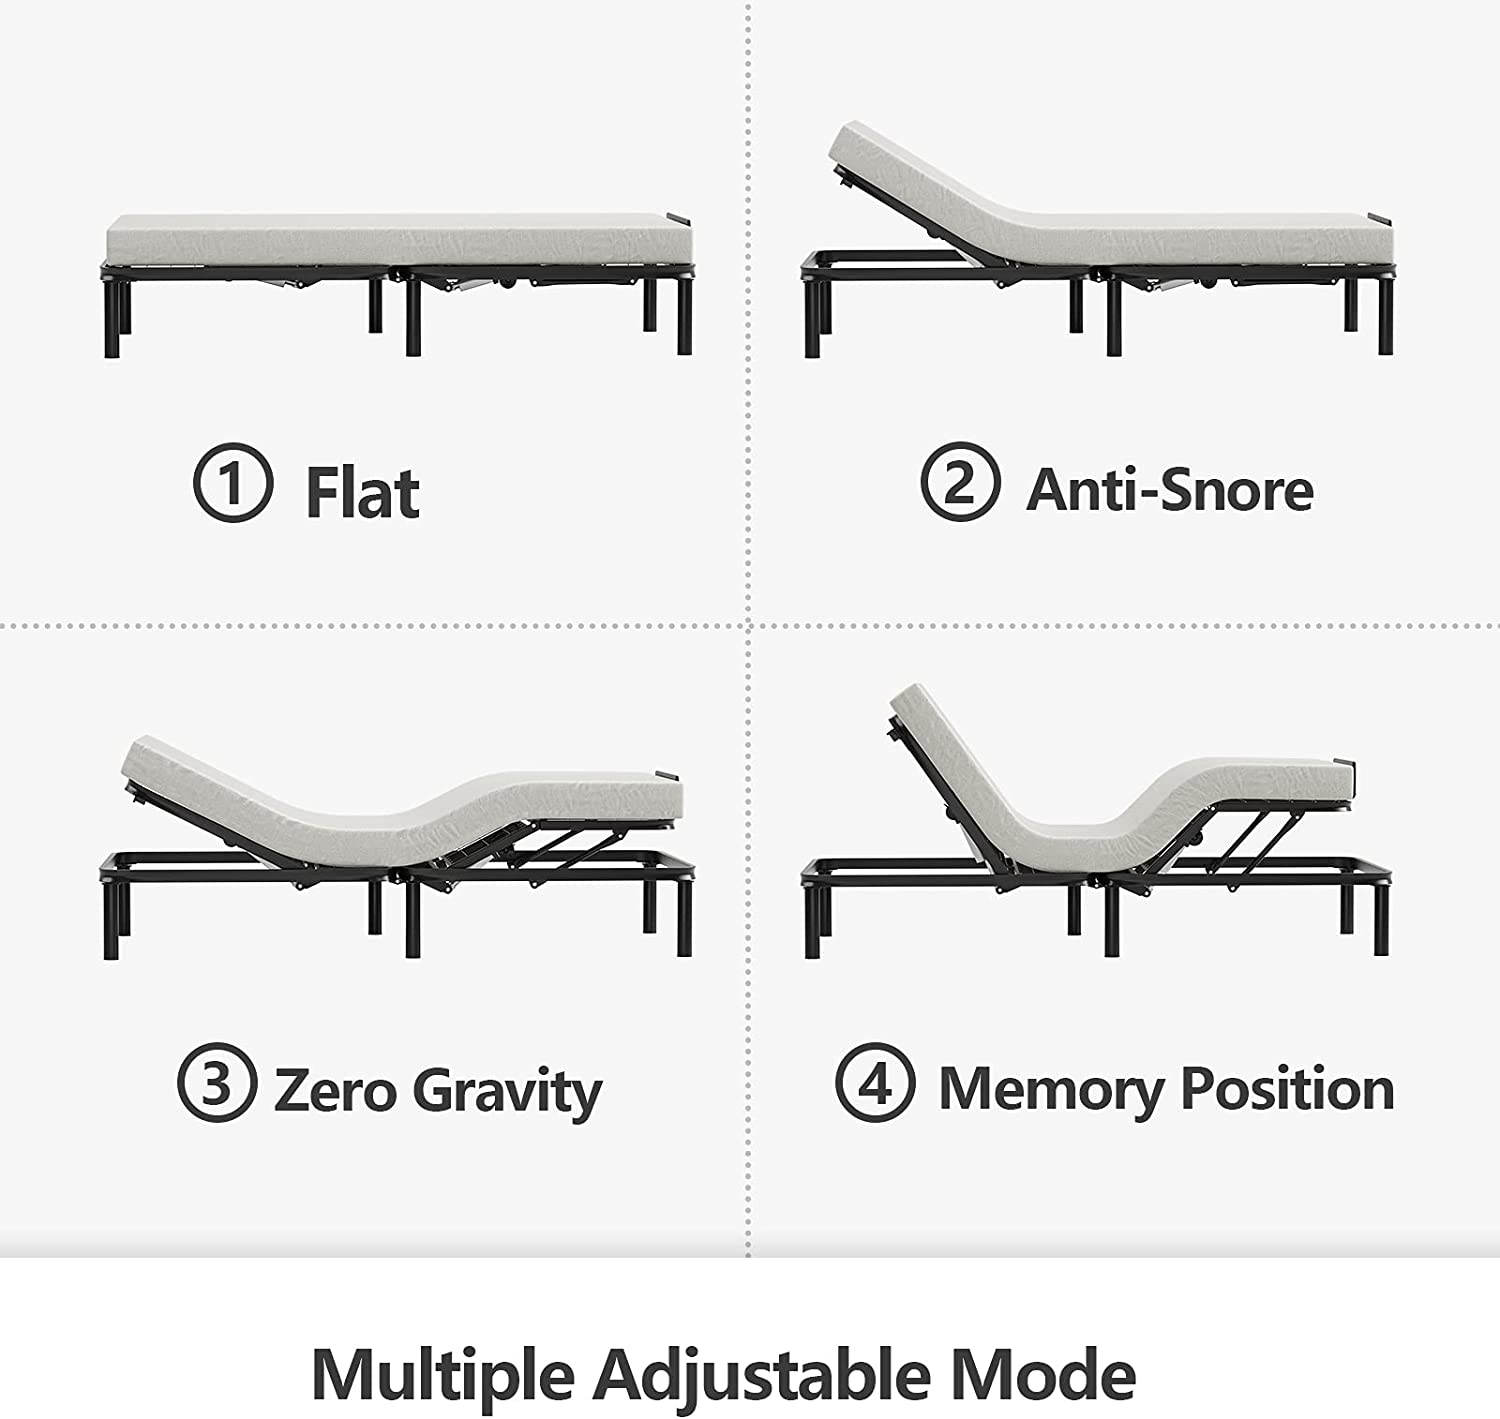 Preset Positions - Adjustable Bed Benefits